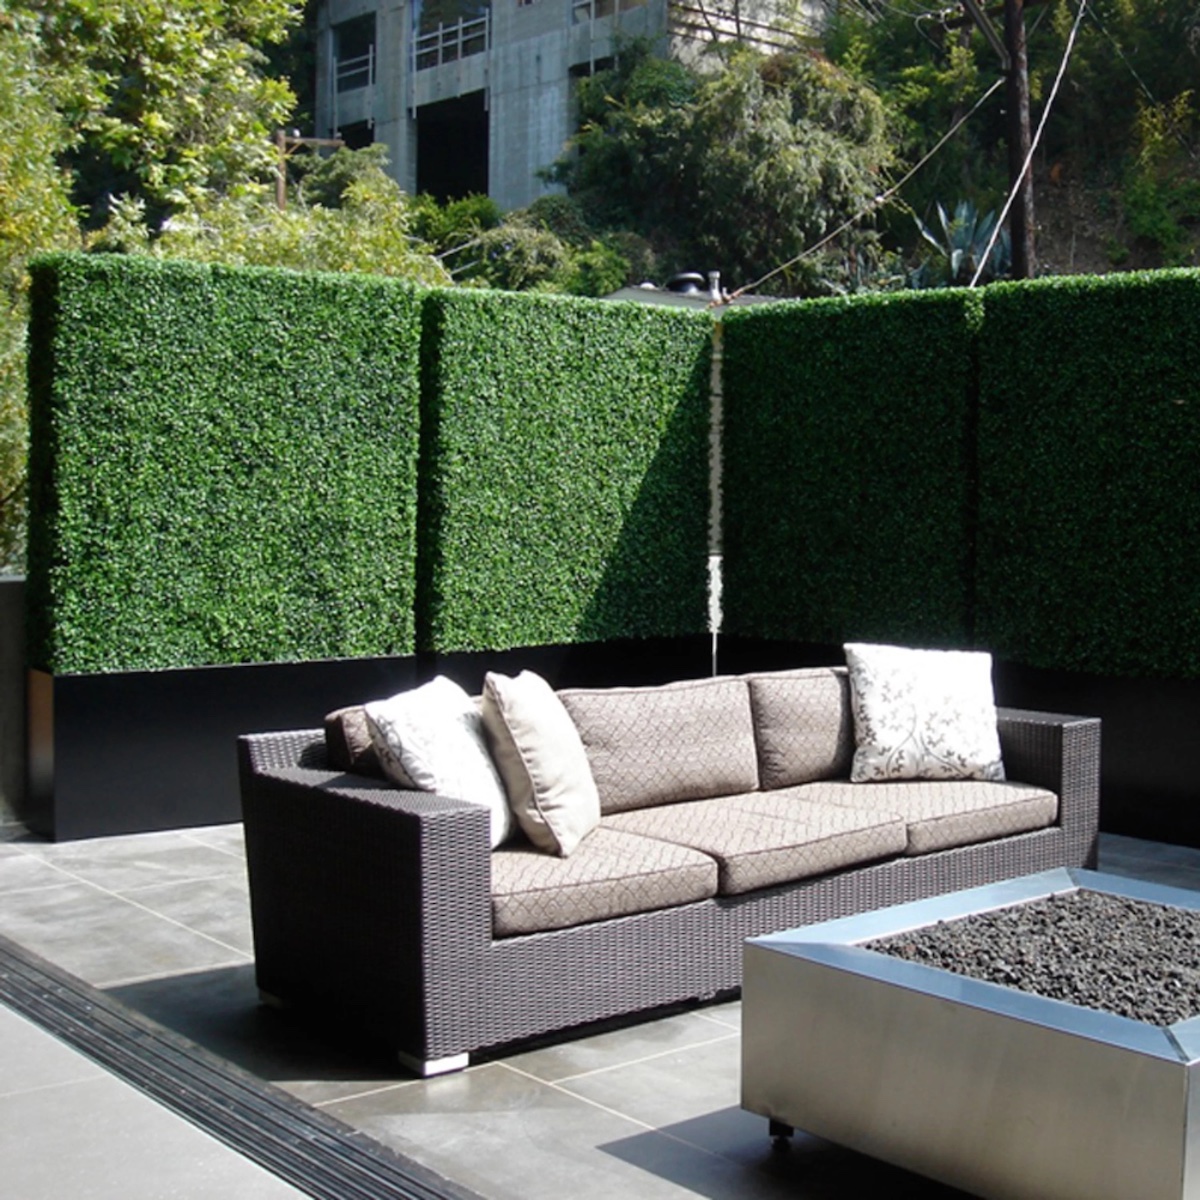 Faux boxwood greenery surrounding a modern patio area